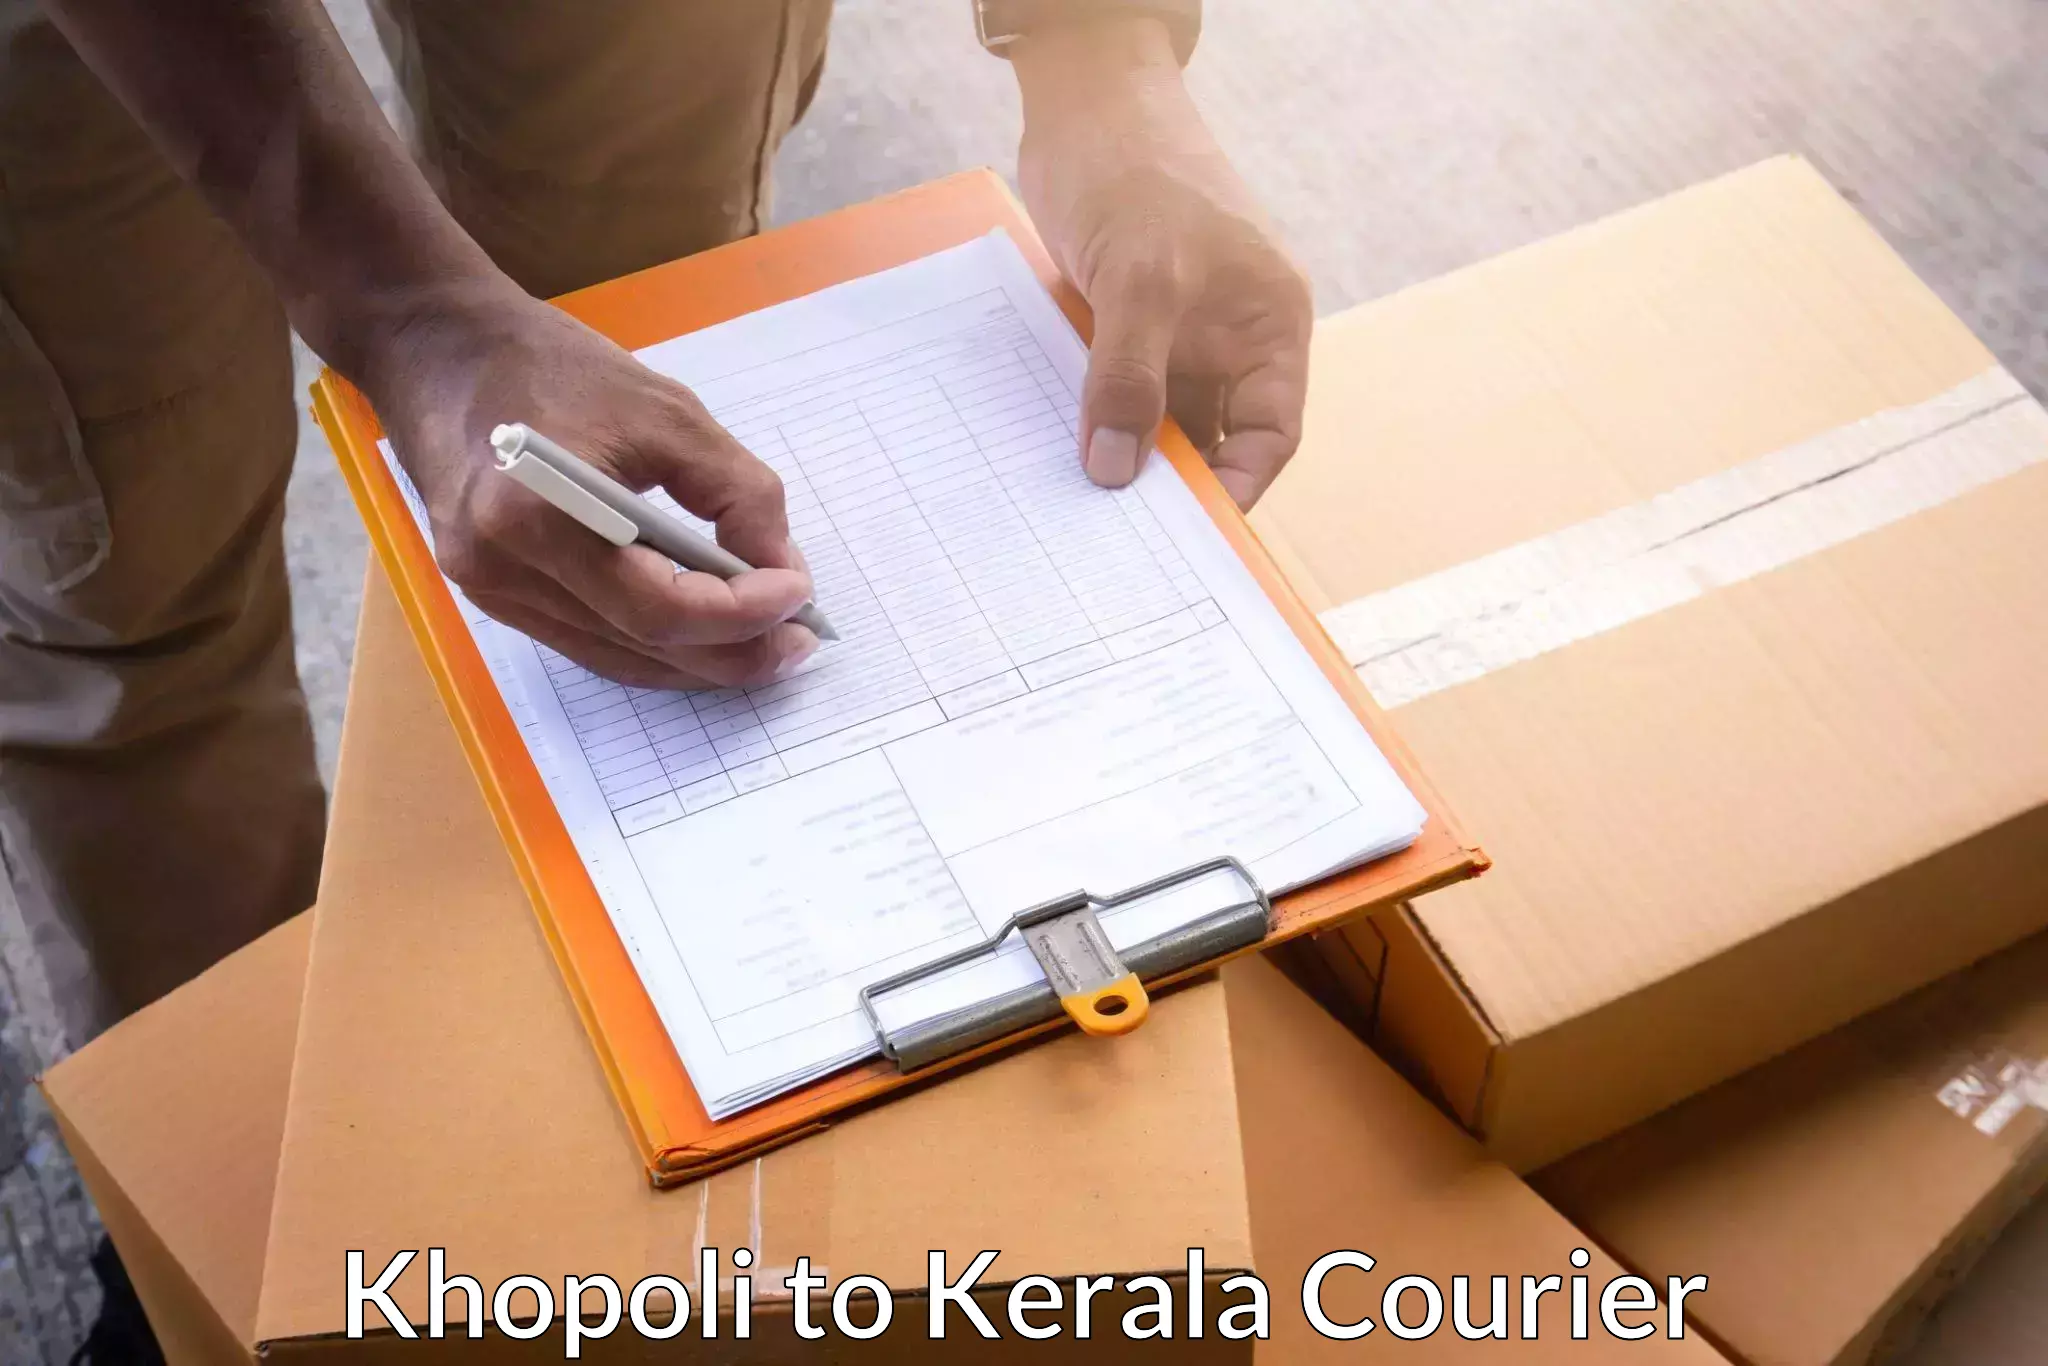 Next-day delivery options Khopoli to Kerala